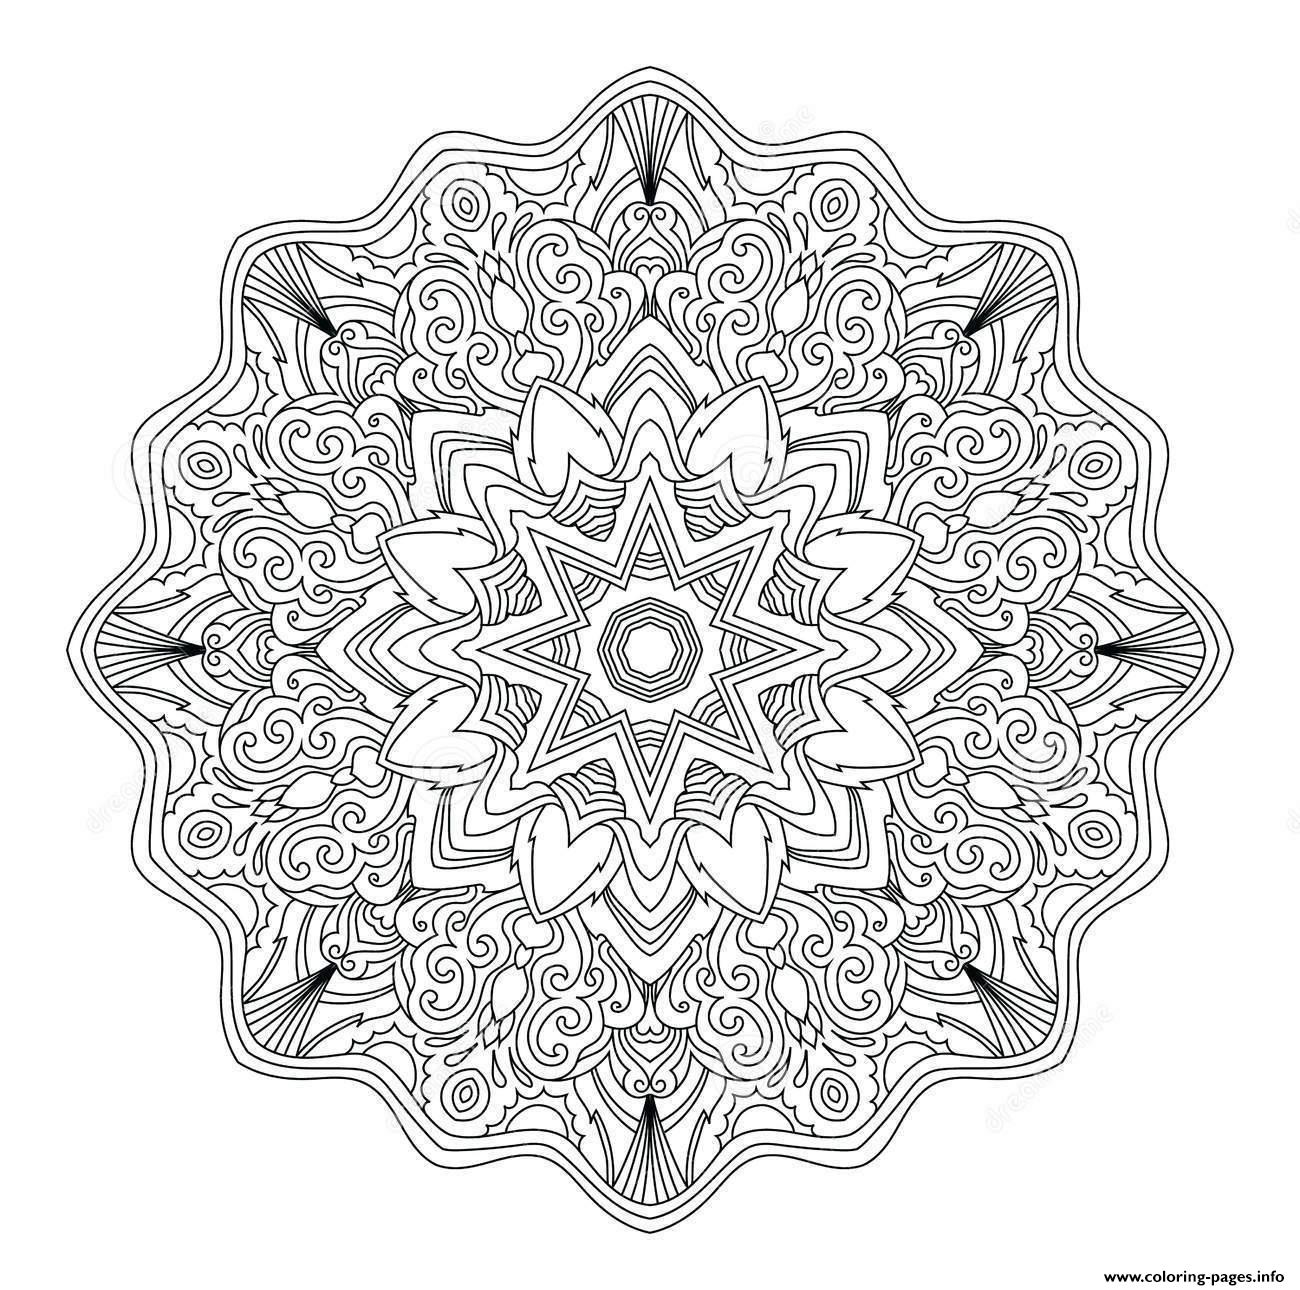 Mandala Adult Abstract Art Therapy coloring